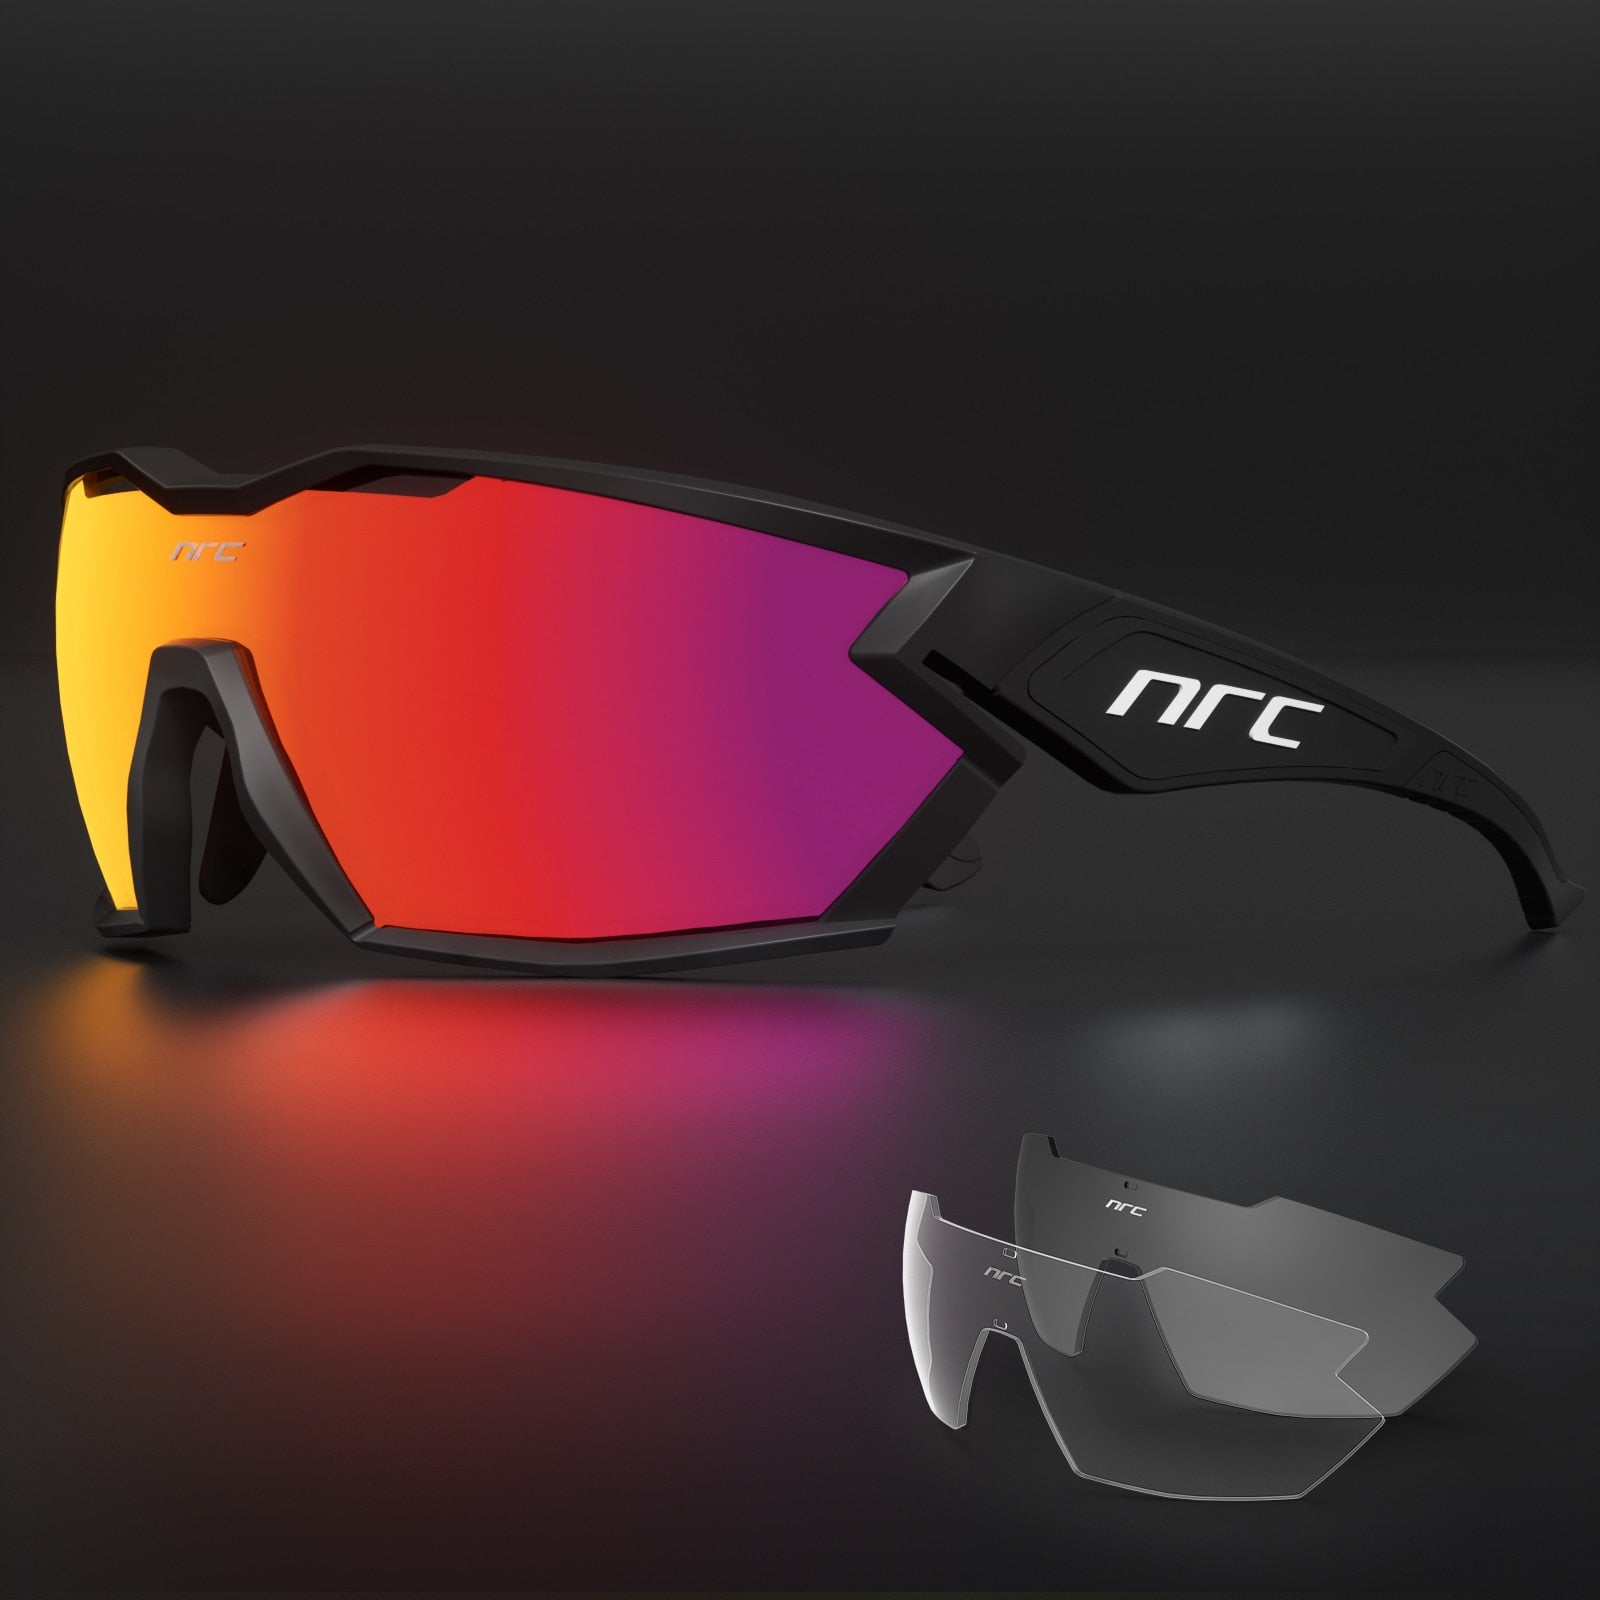 Full-frame black red NRC Pro Cycling glasses